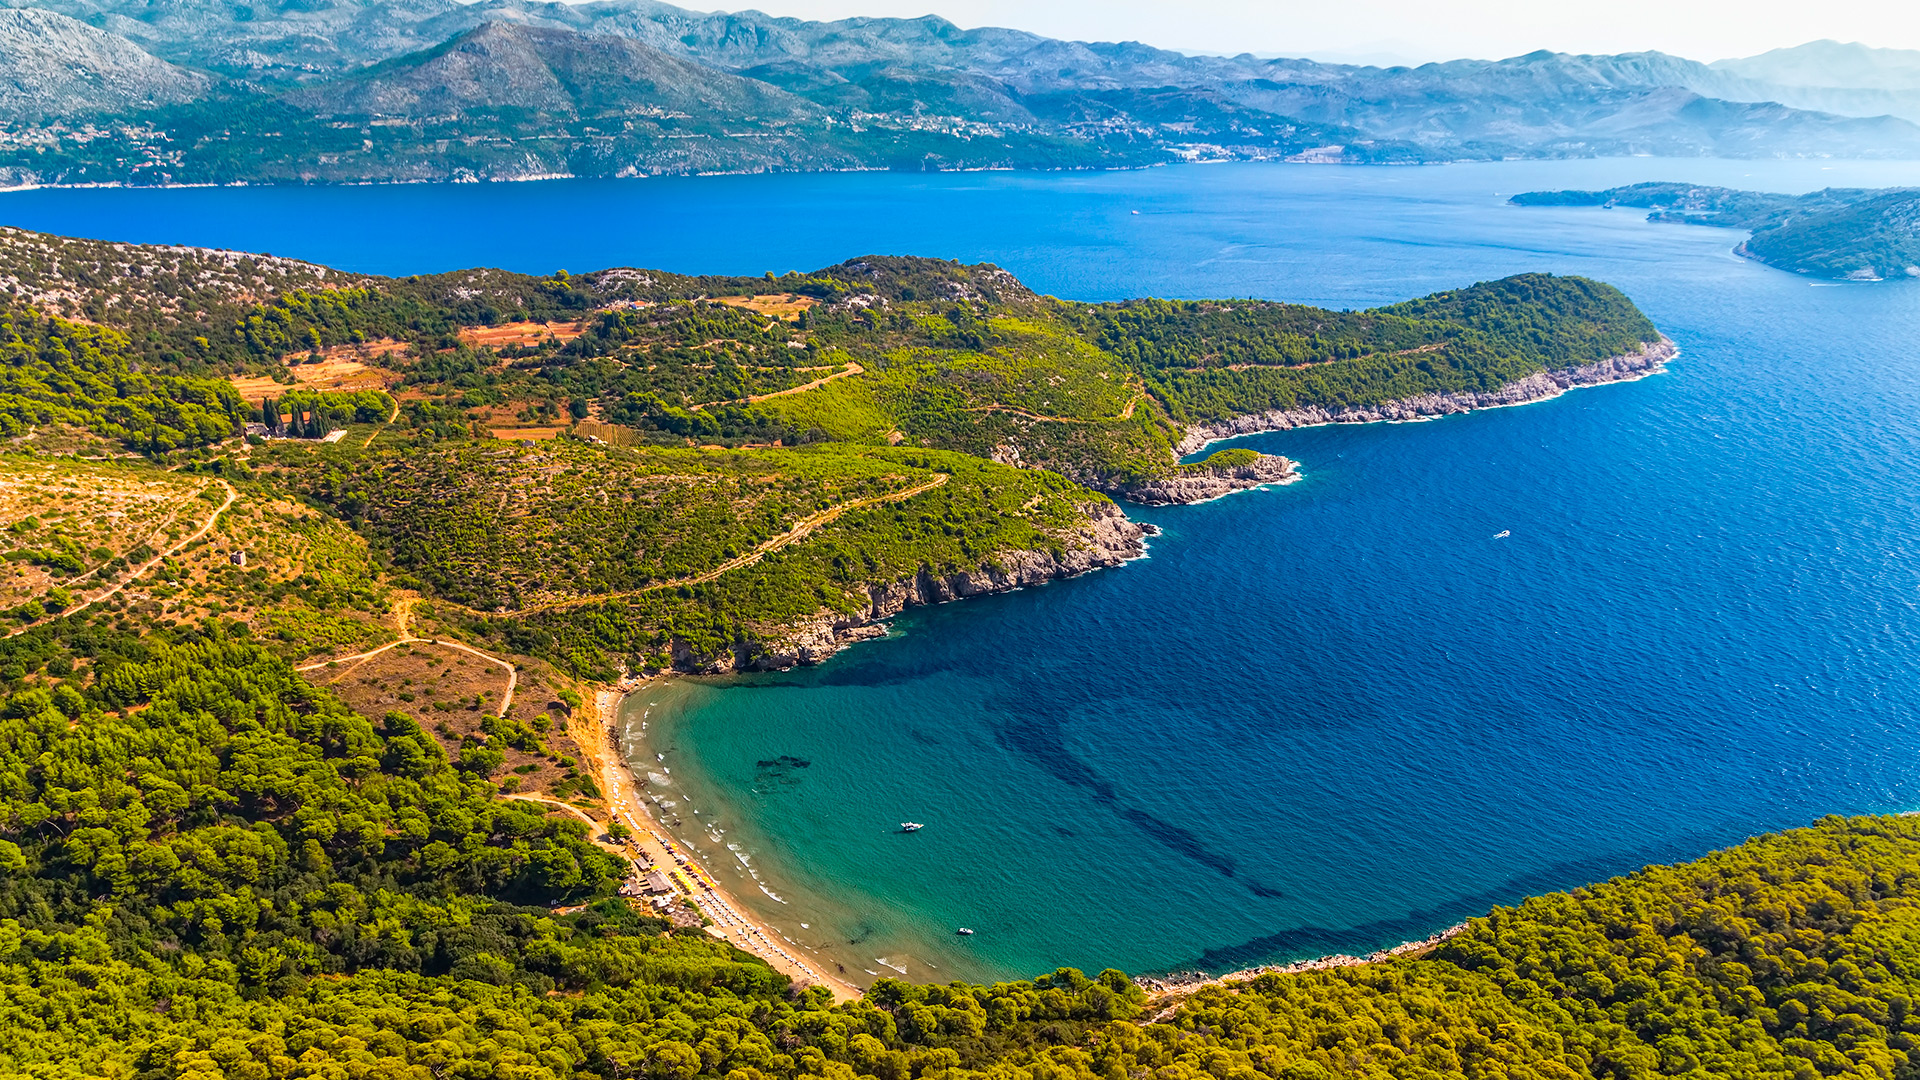 The beach on the Lopud island, Elaphiti archipelago, Croatia - Croatian waters SimpleSail sailing routes